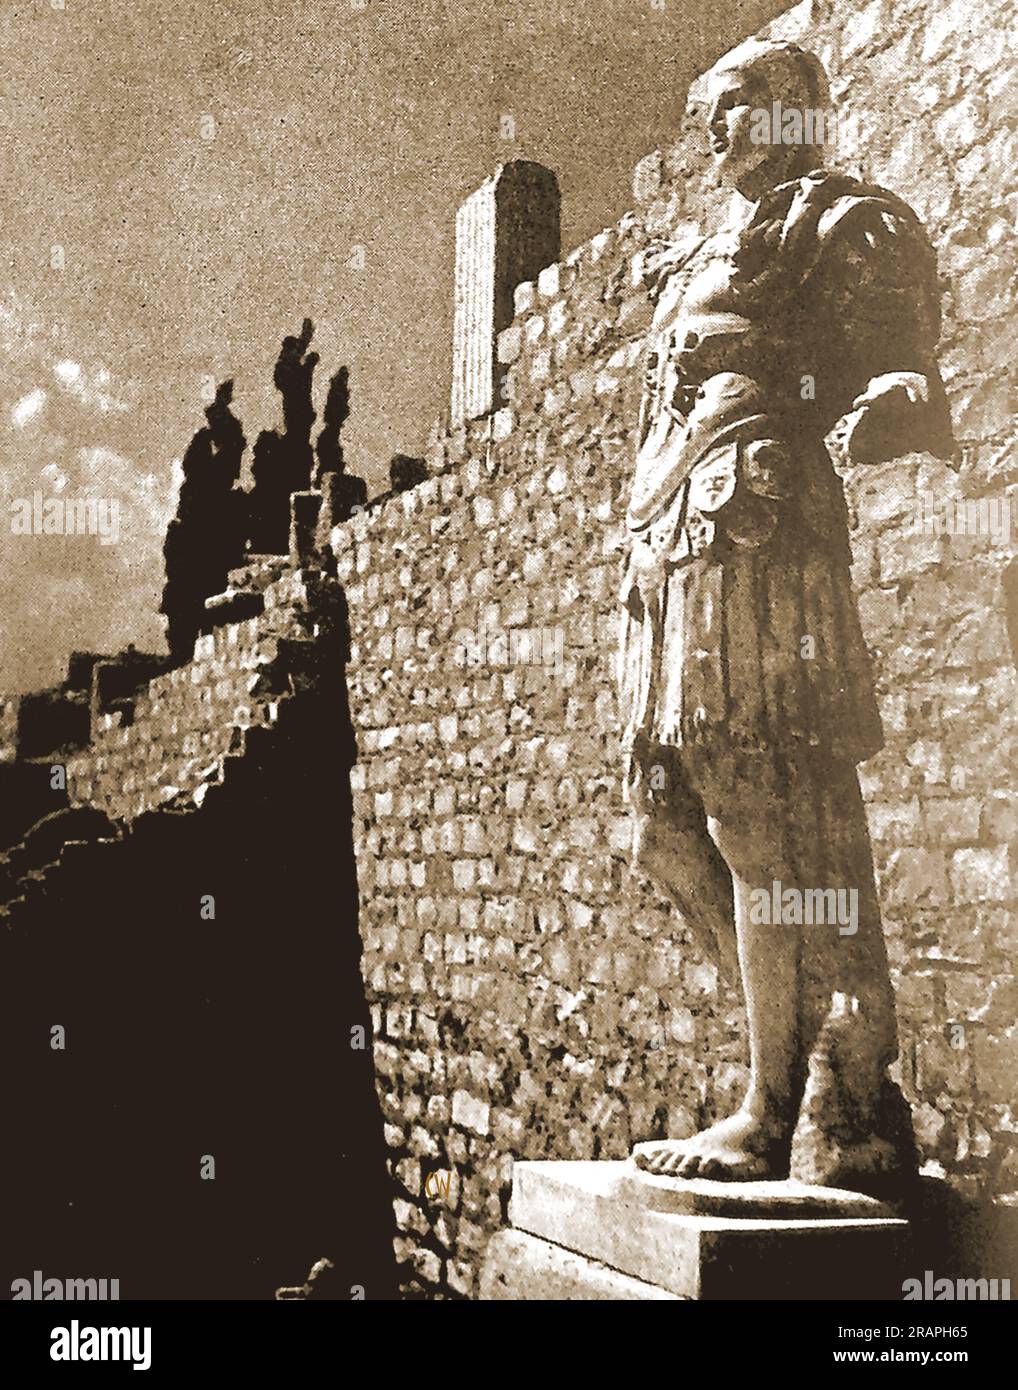 A statue among the Roman remains at Vaucluse, France in 1939. - Una statua tra i resti romani a Vaucluse, in Francia, nel 1939. - Une statue parmi les restes romains à Vaucluse, en France, en 1939. Stock Photo